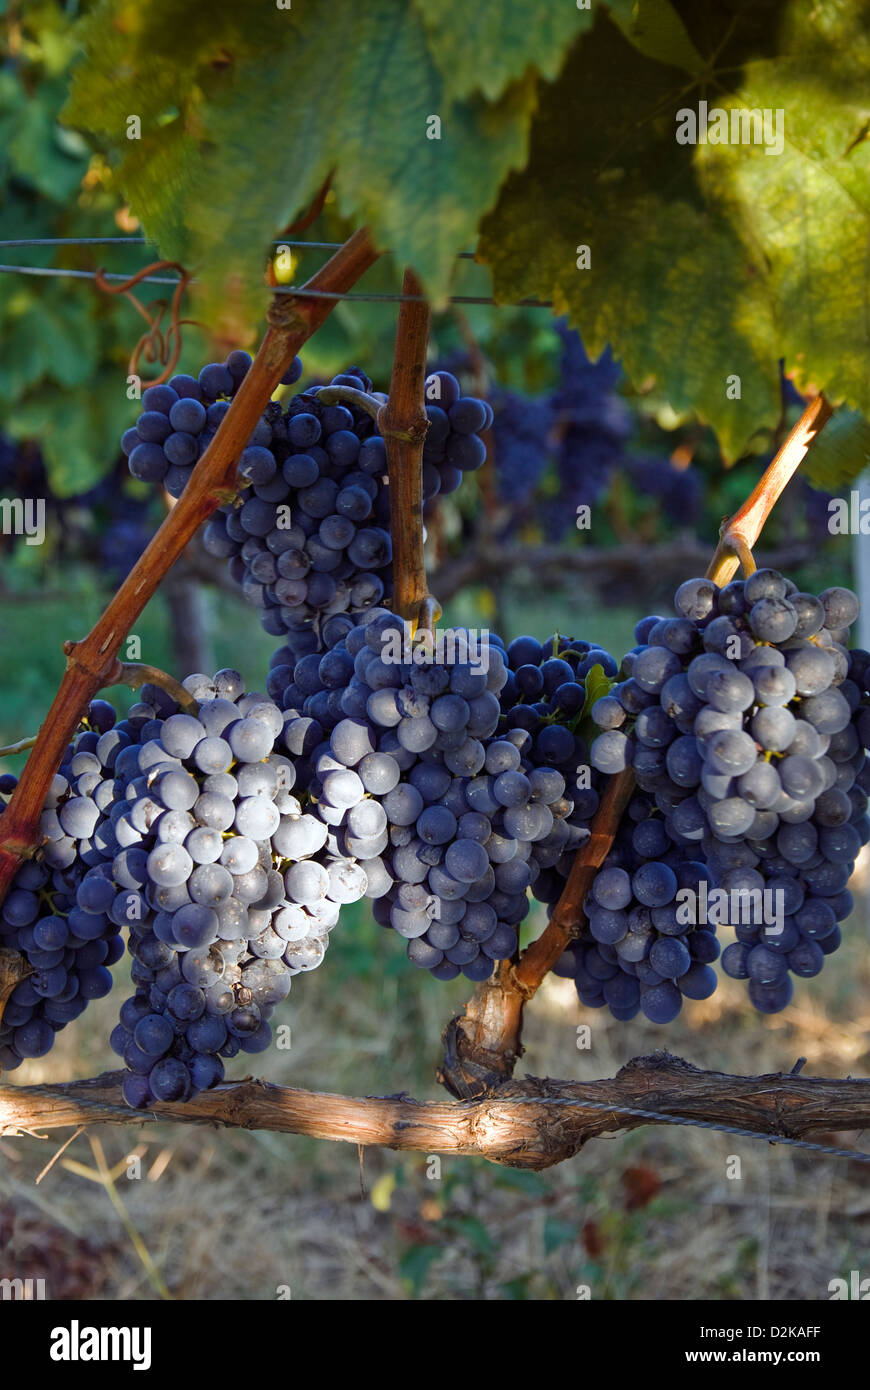 Ripe Grapes on the vine Stock Photo